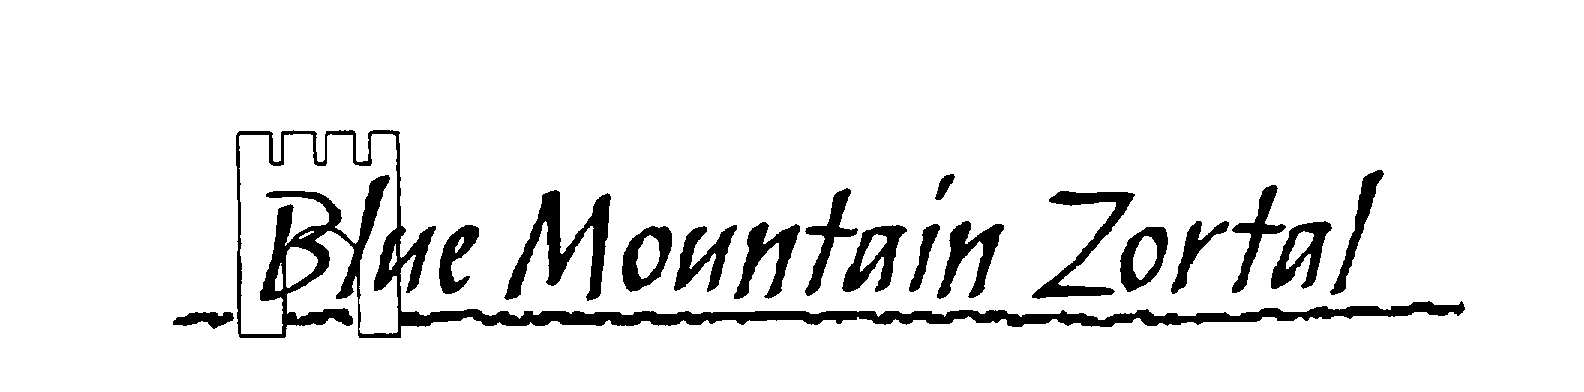 BLUE MOUNTAIN ZORTAL